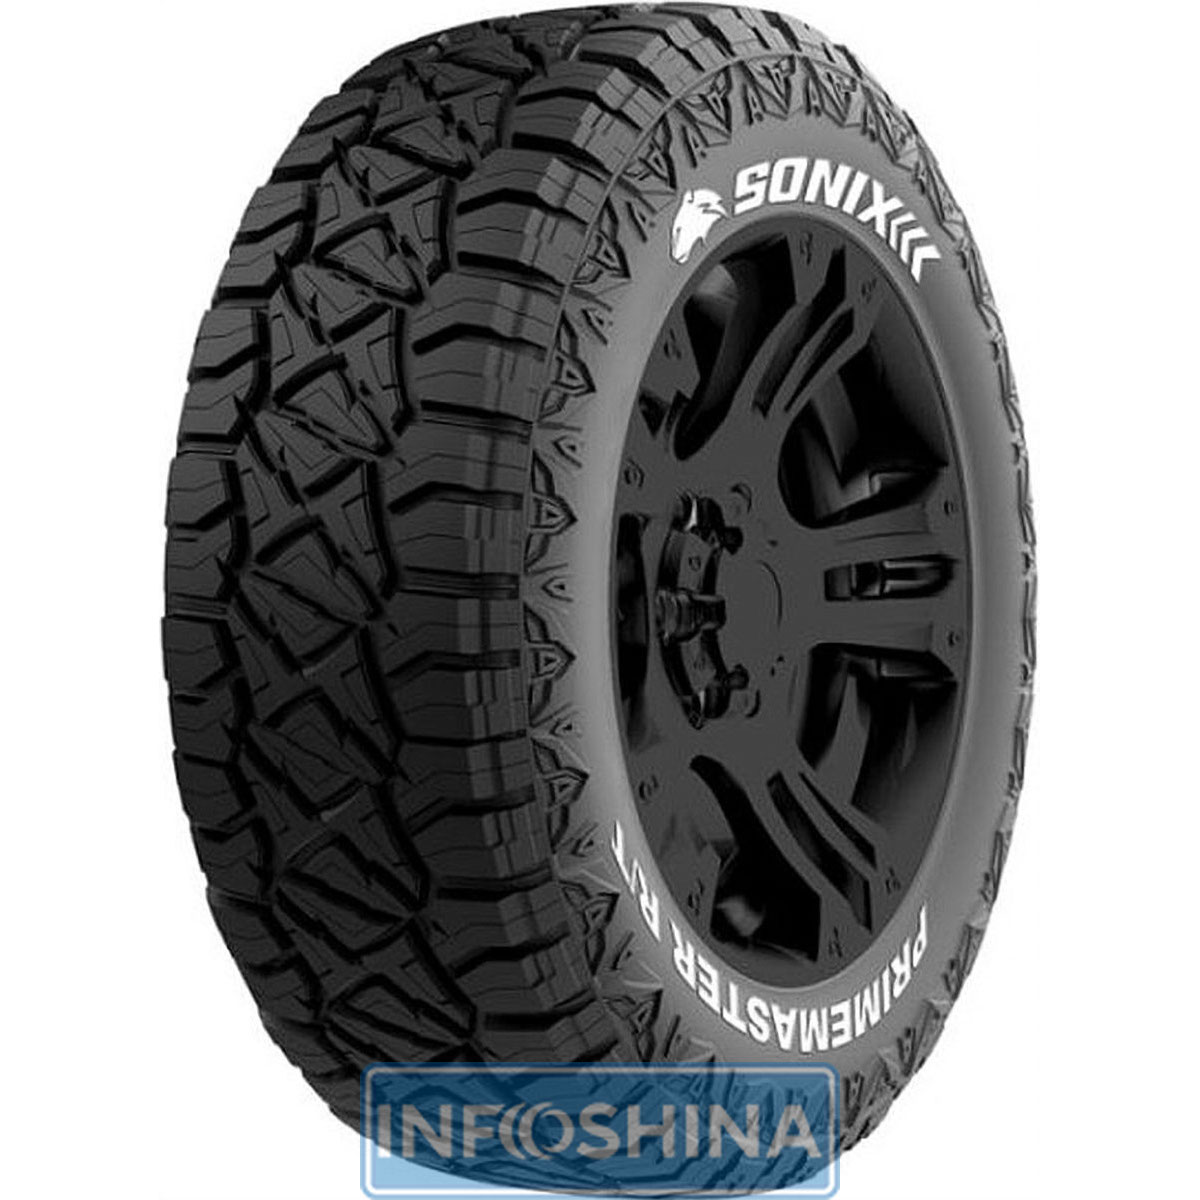 Купить шины Sonix Primemaster R/T 265/65 R17 116Q XL